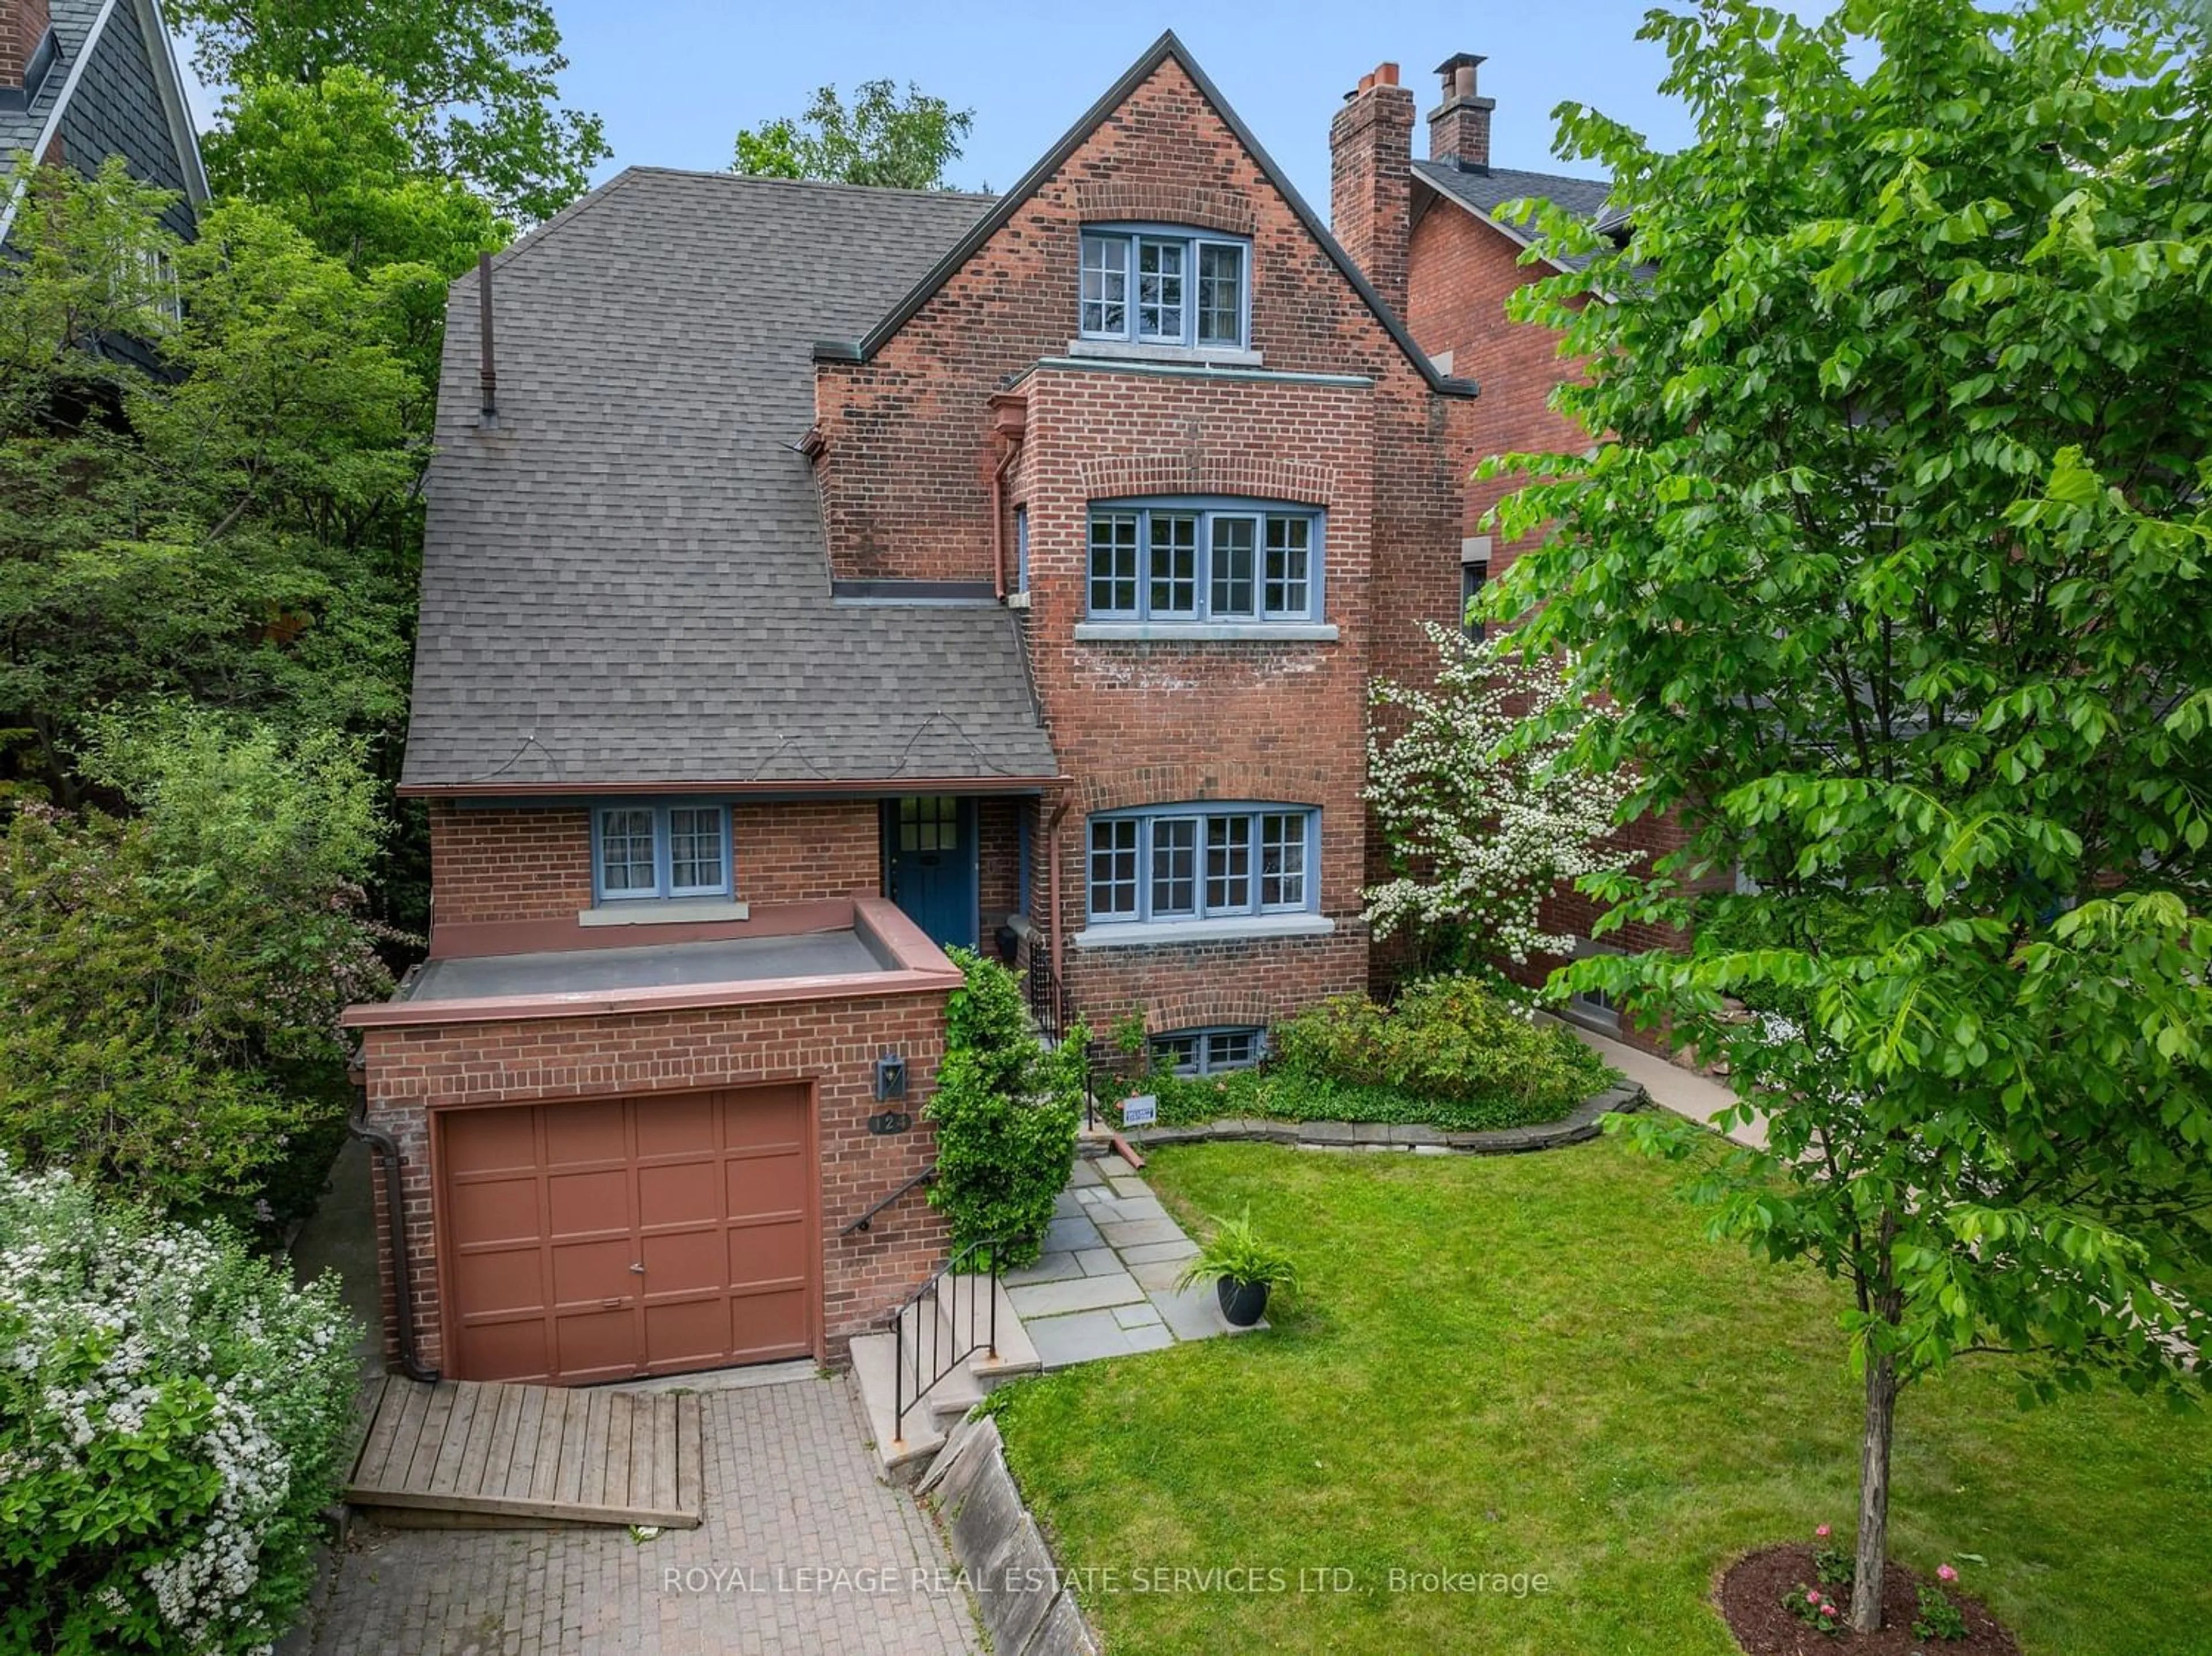 Home with brick exterior material for 124 Roxborough Dr, Toronto Ontario M4W 1X4